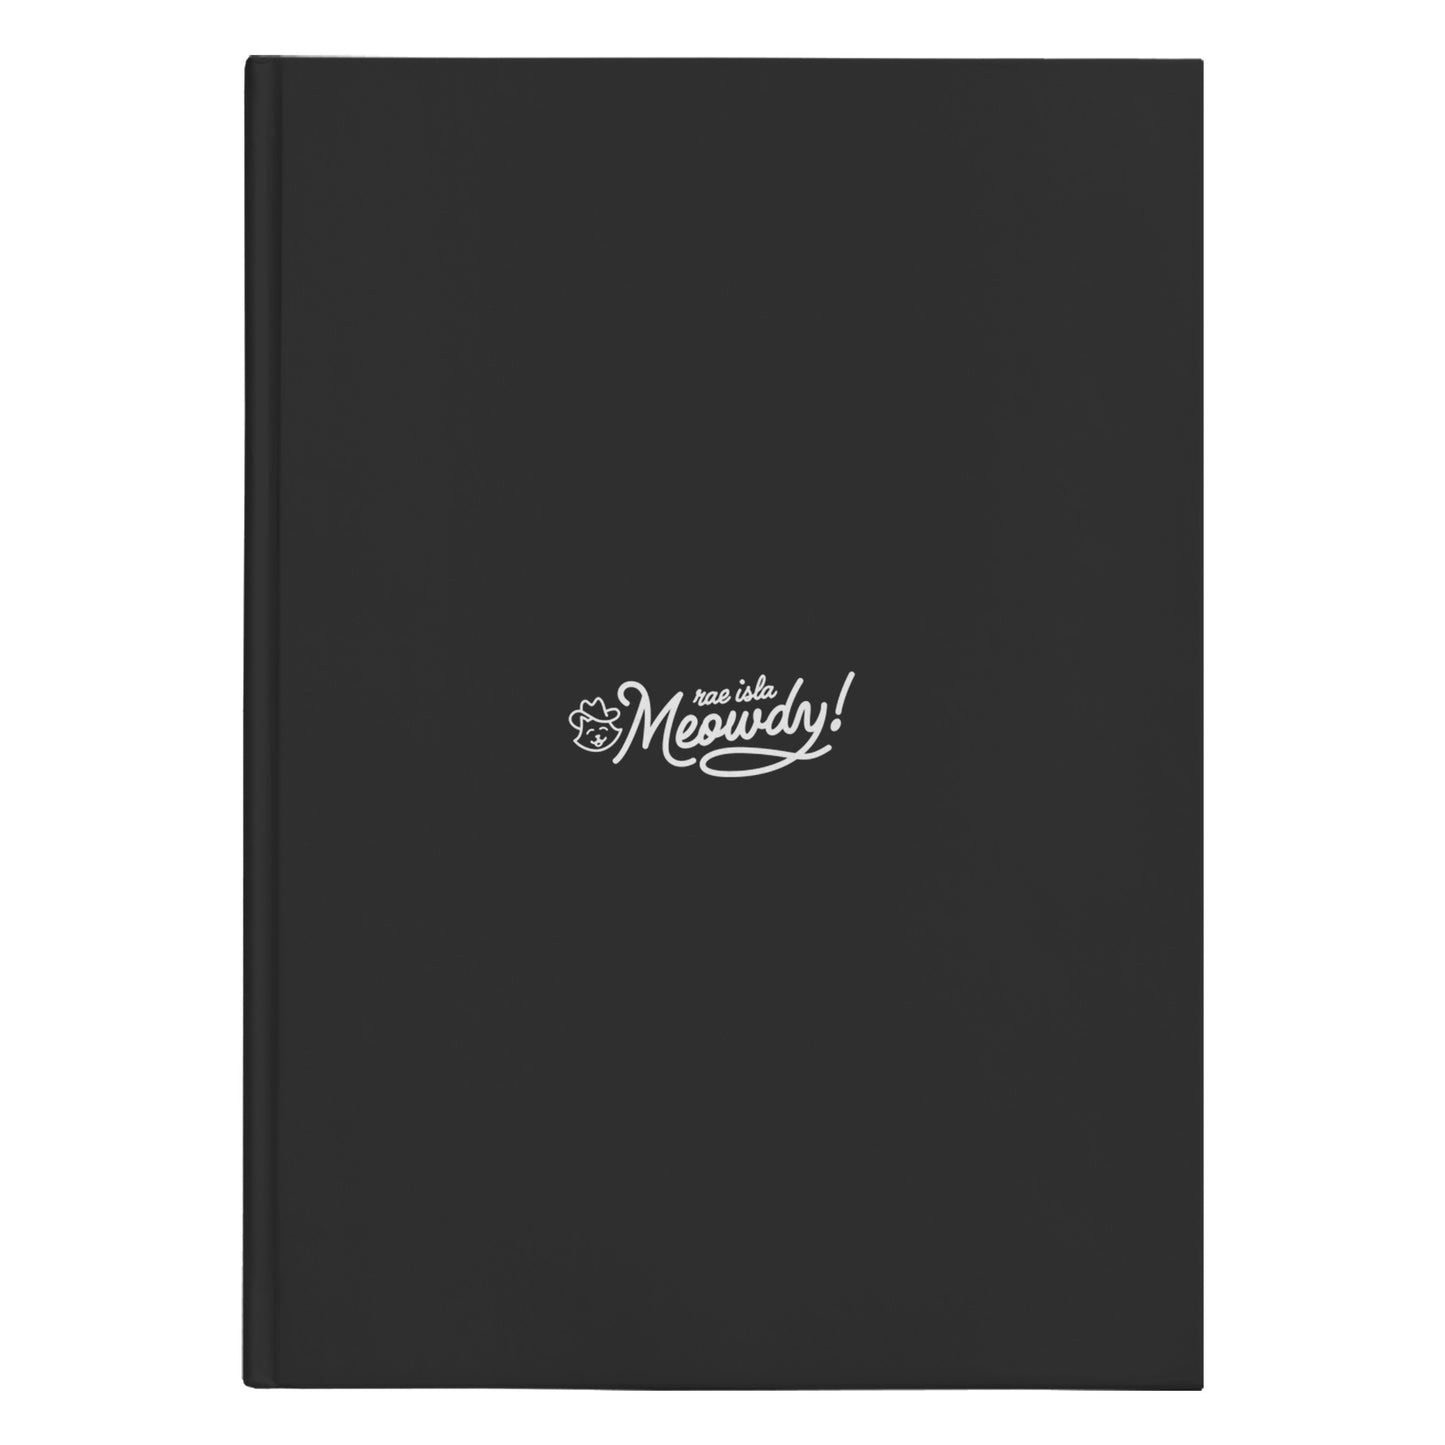 Meowdy Hardcover Journal